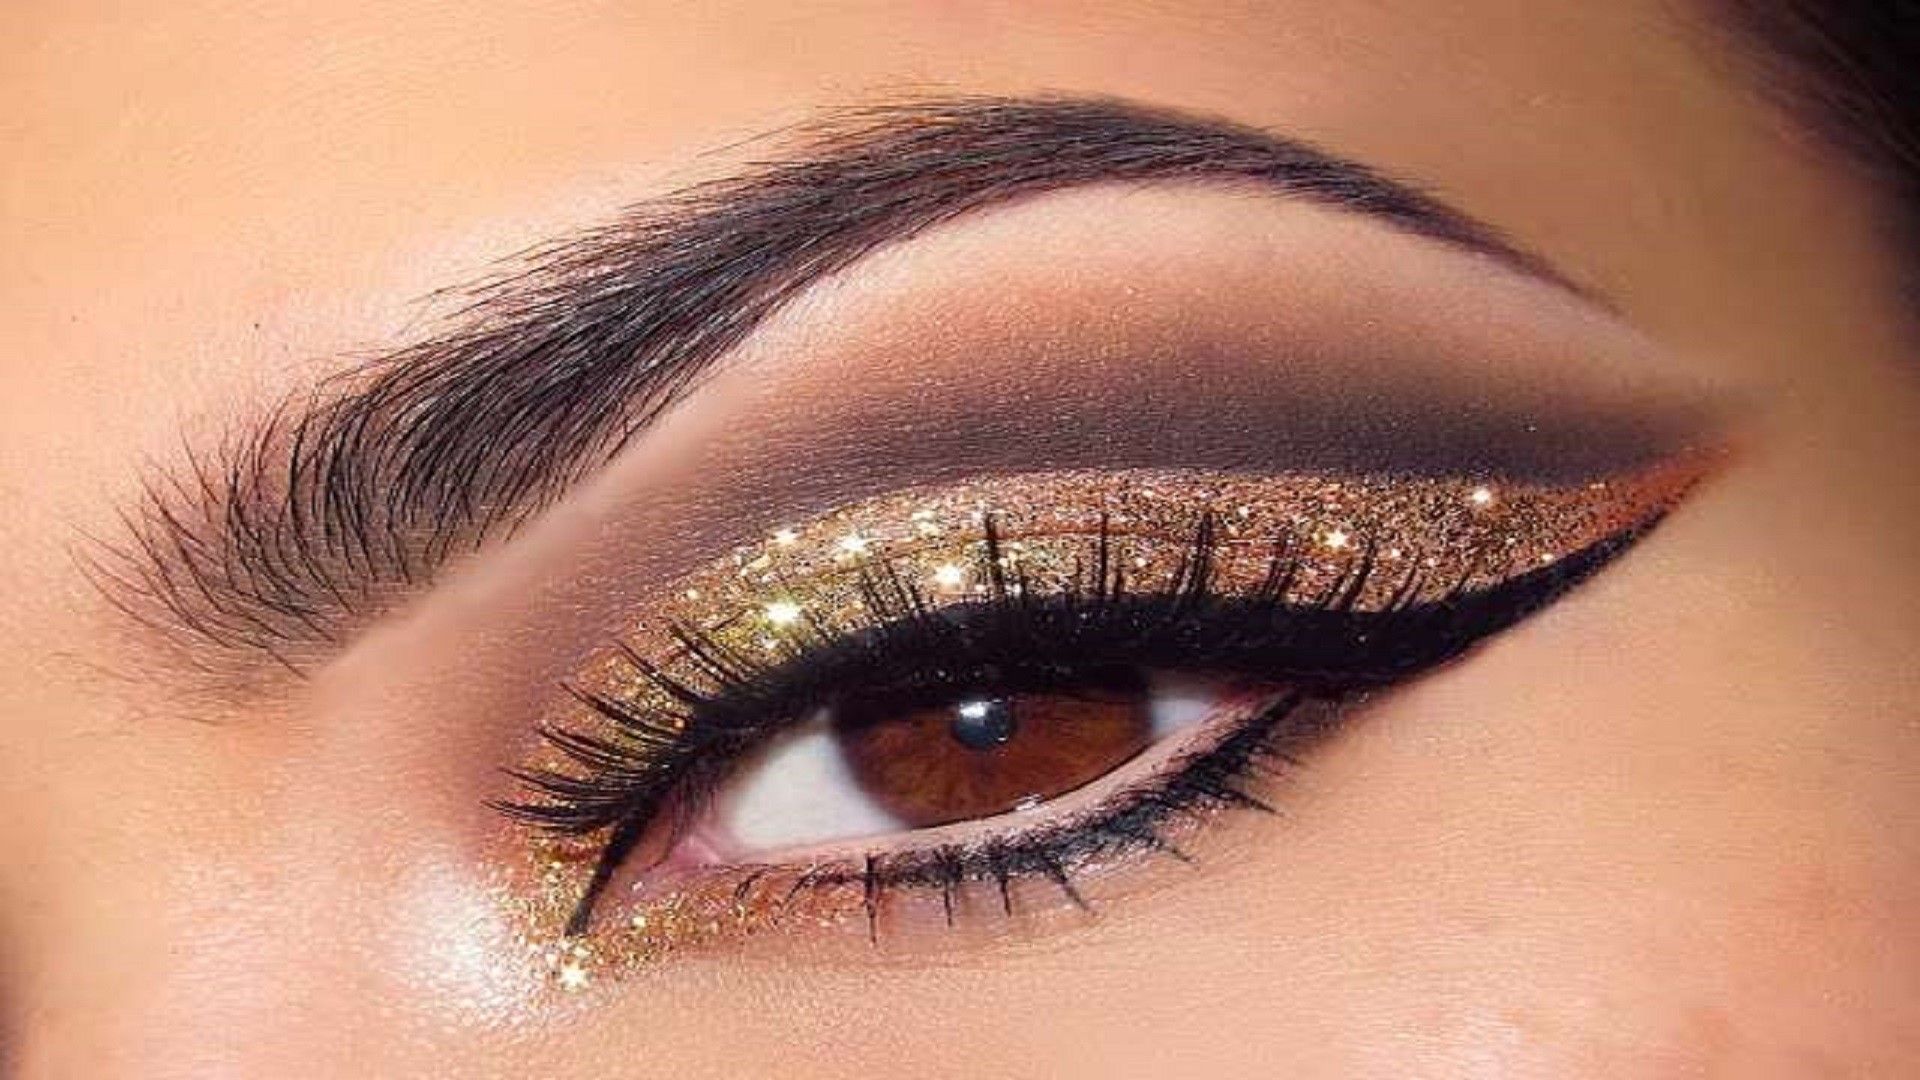 Golden eye makeup hd free wallpapers for desktops glamorous glitter eye makeup for you hd free